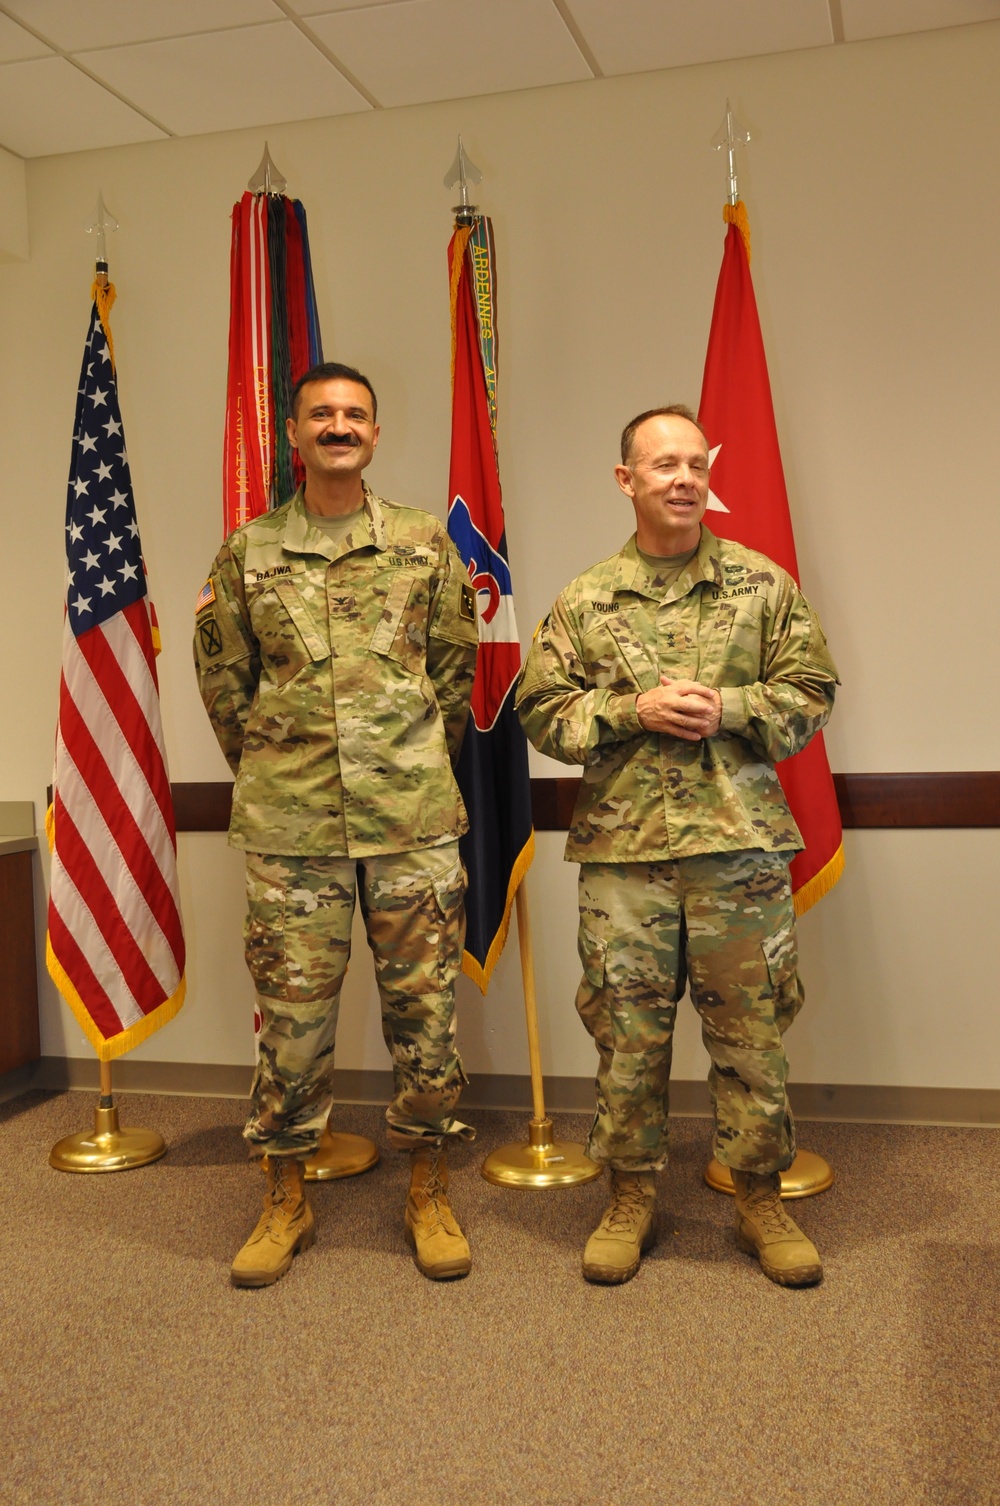 General recognizes senior officers upon departure